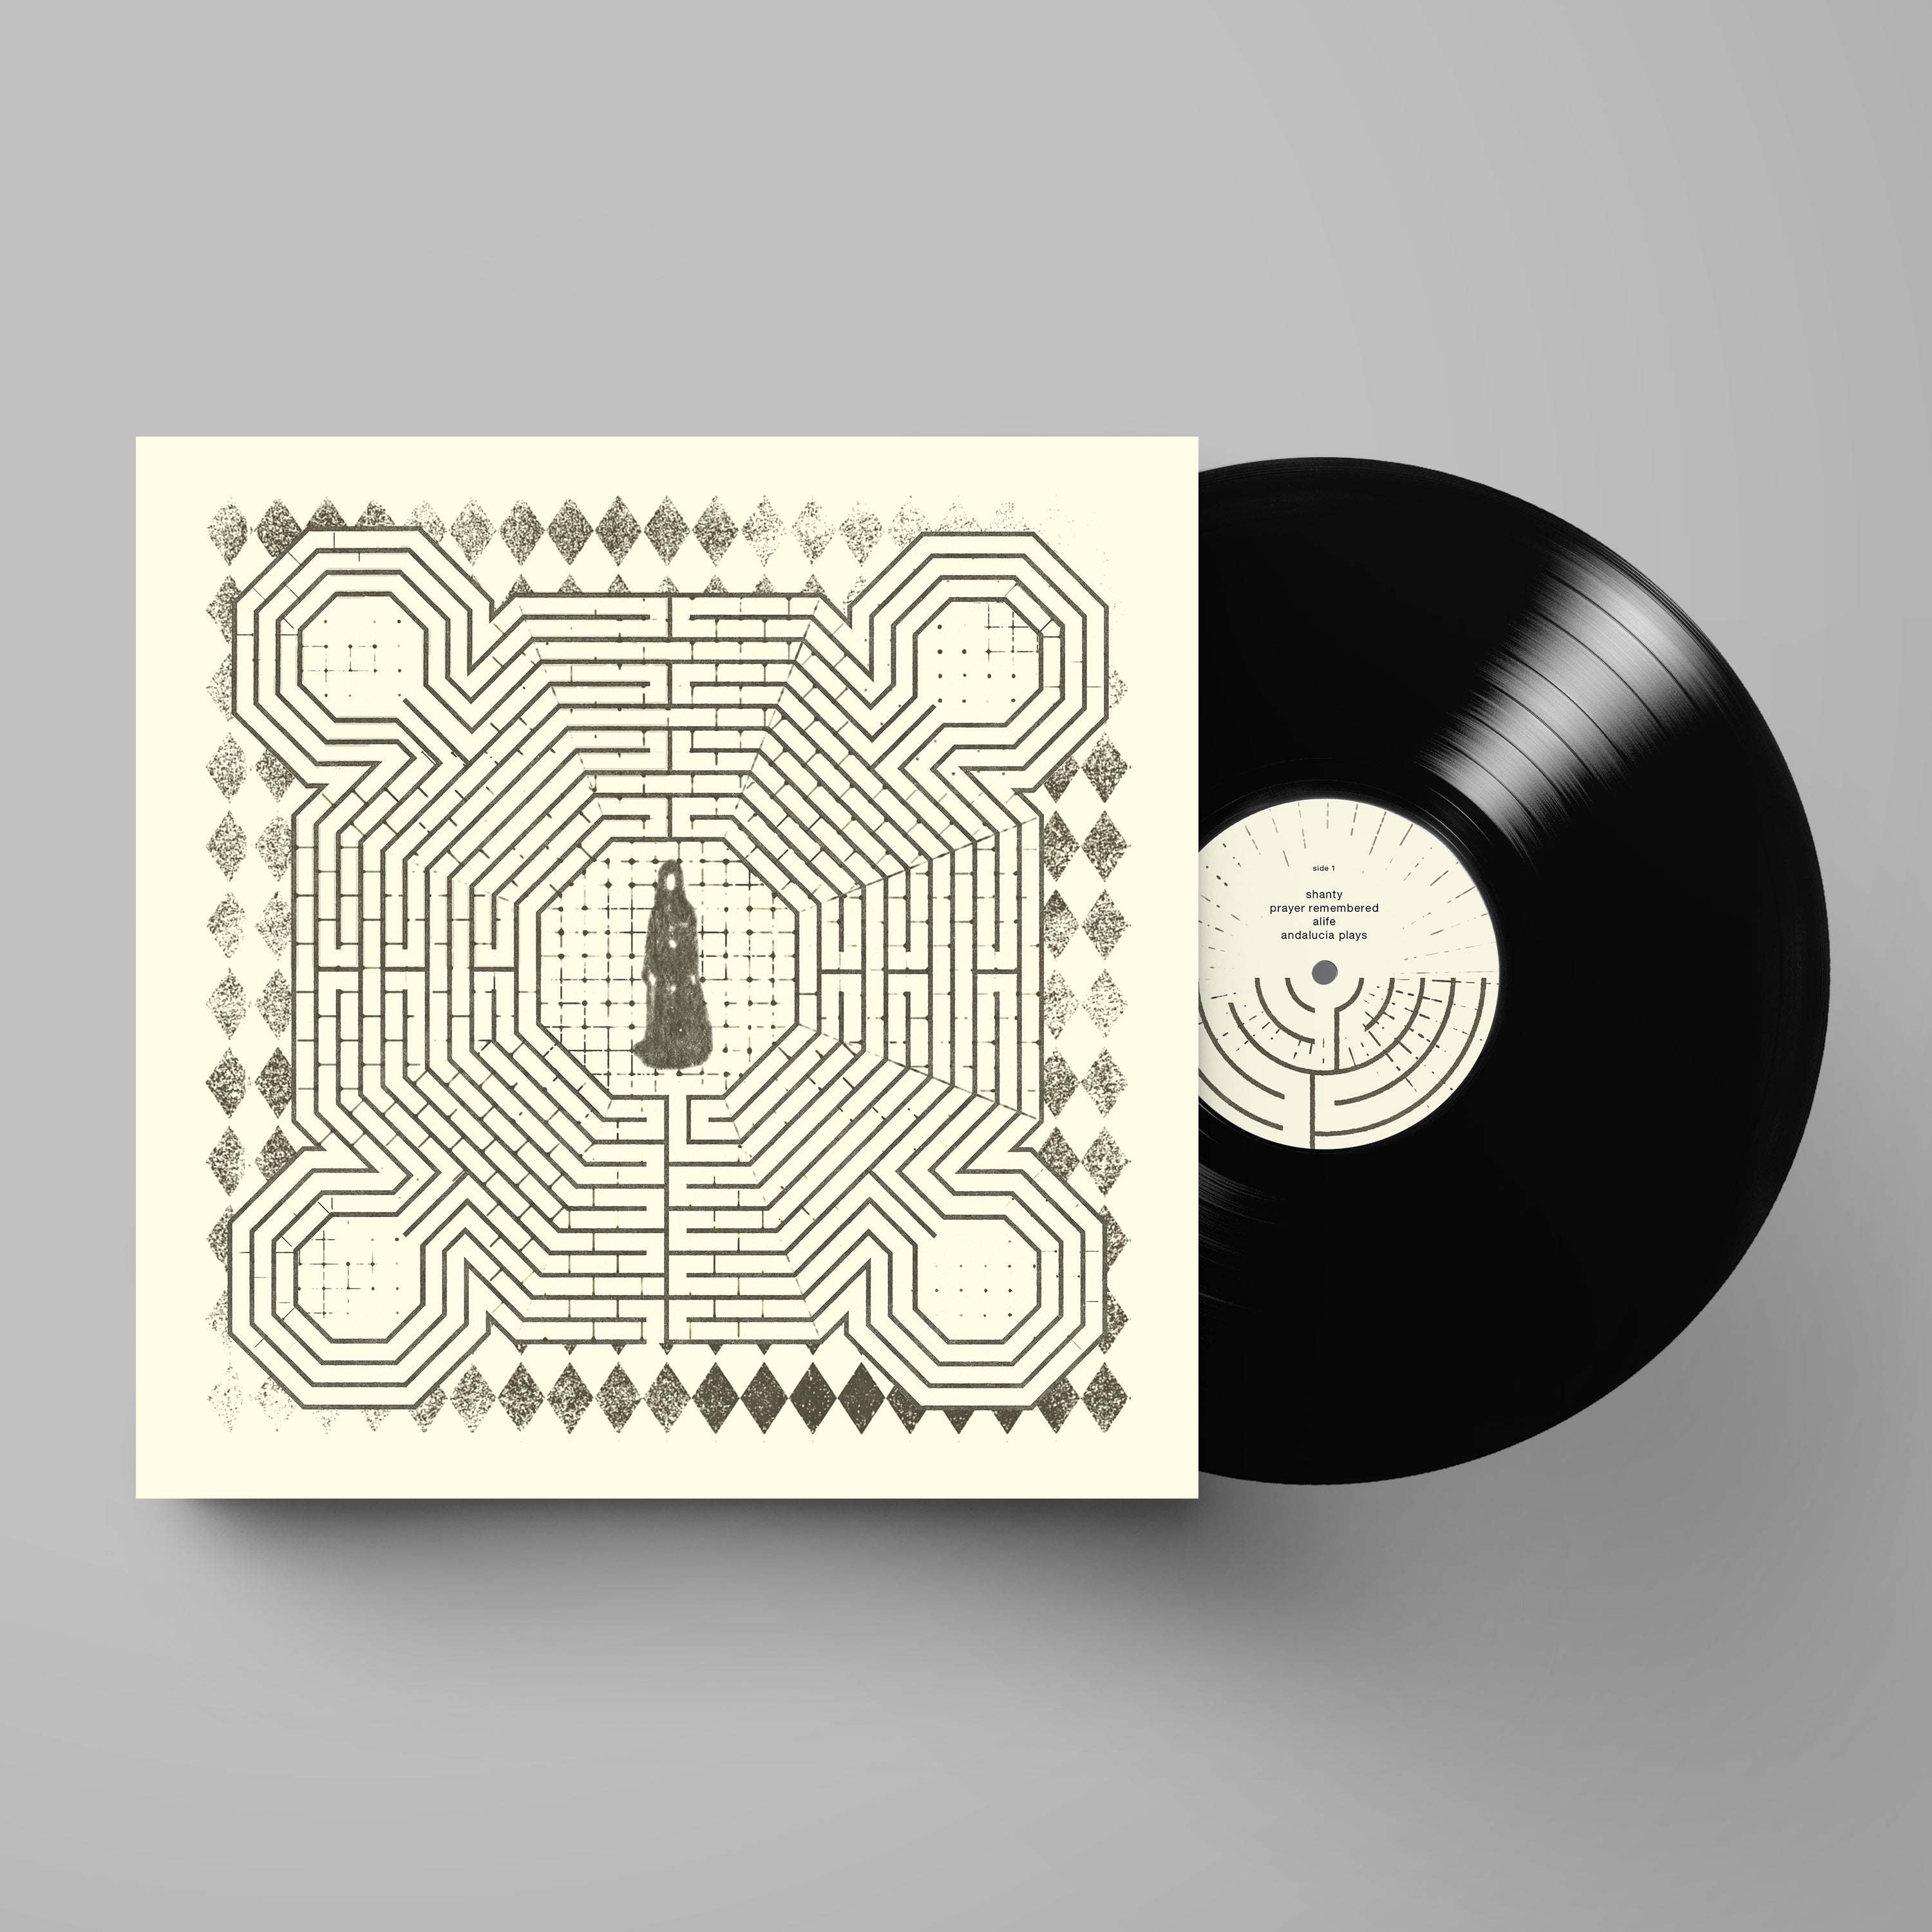 Slowdive - everything is alive: Vinyl LP